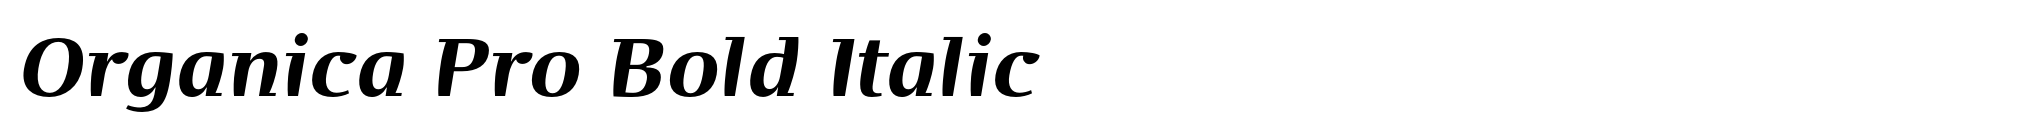 Organica Pro Bold Italic image